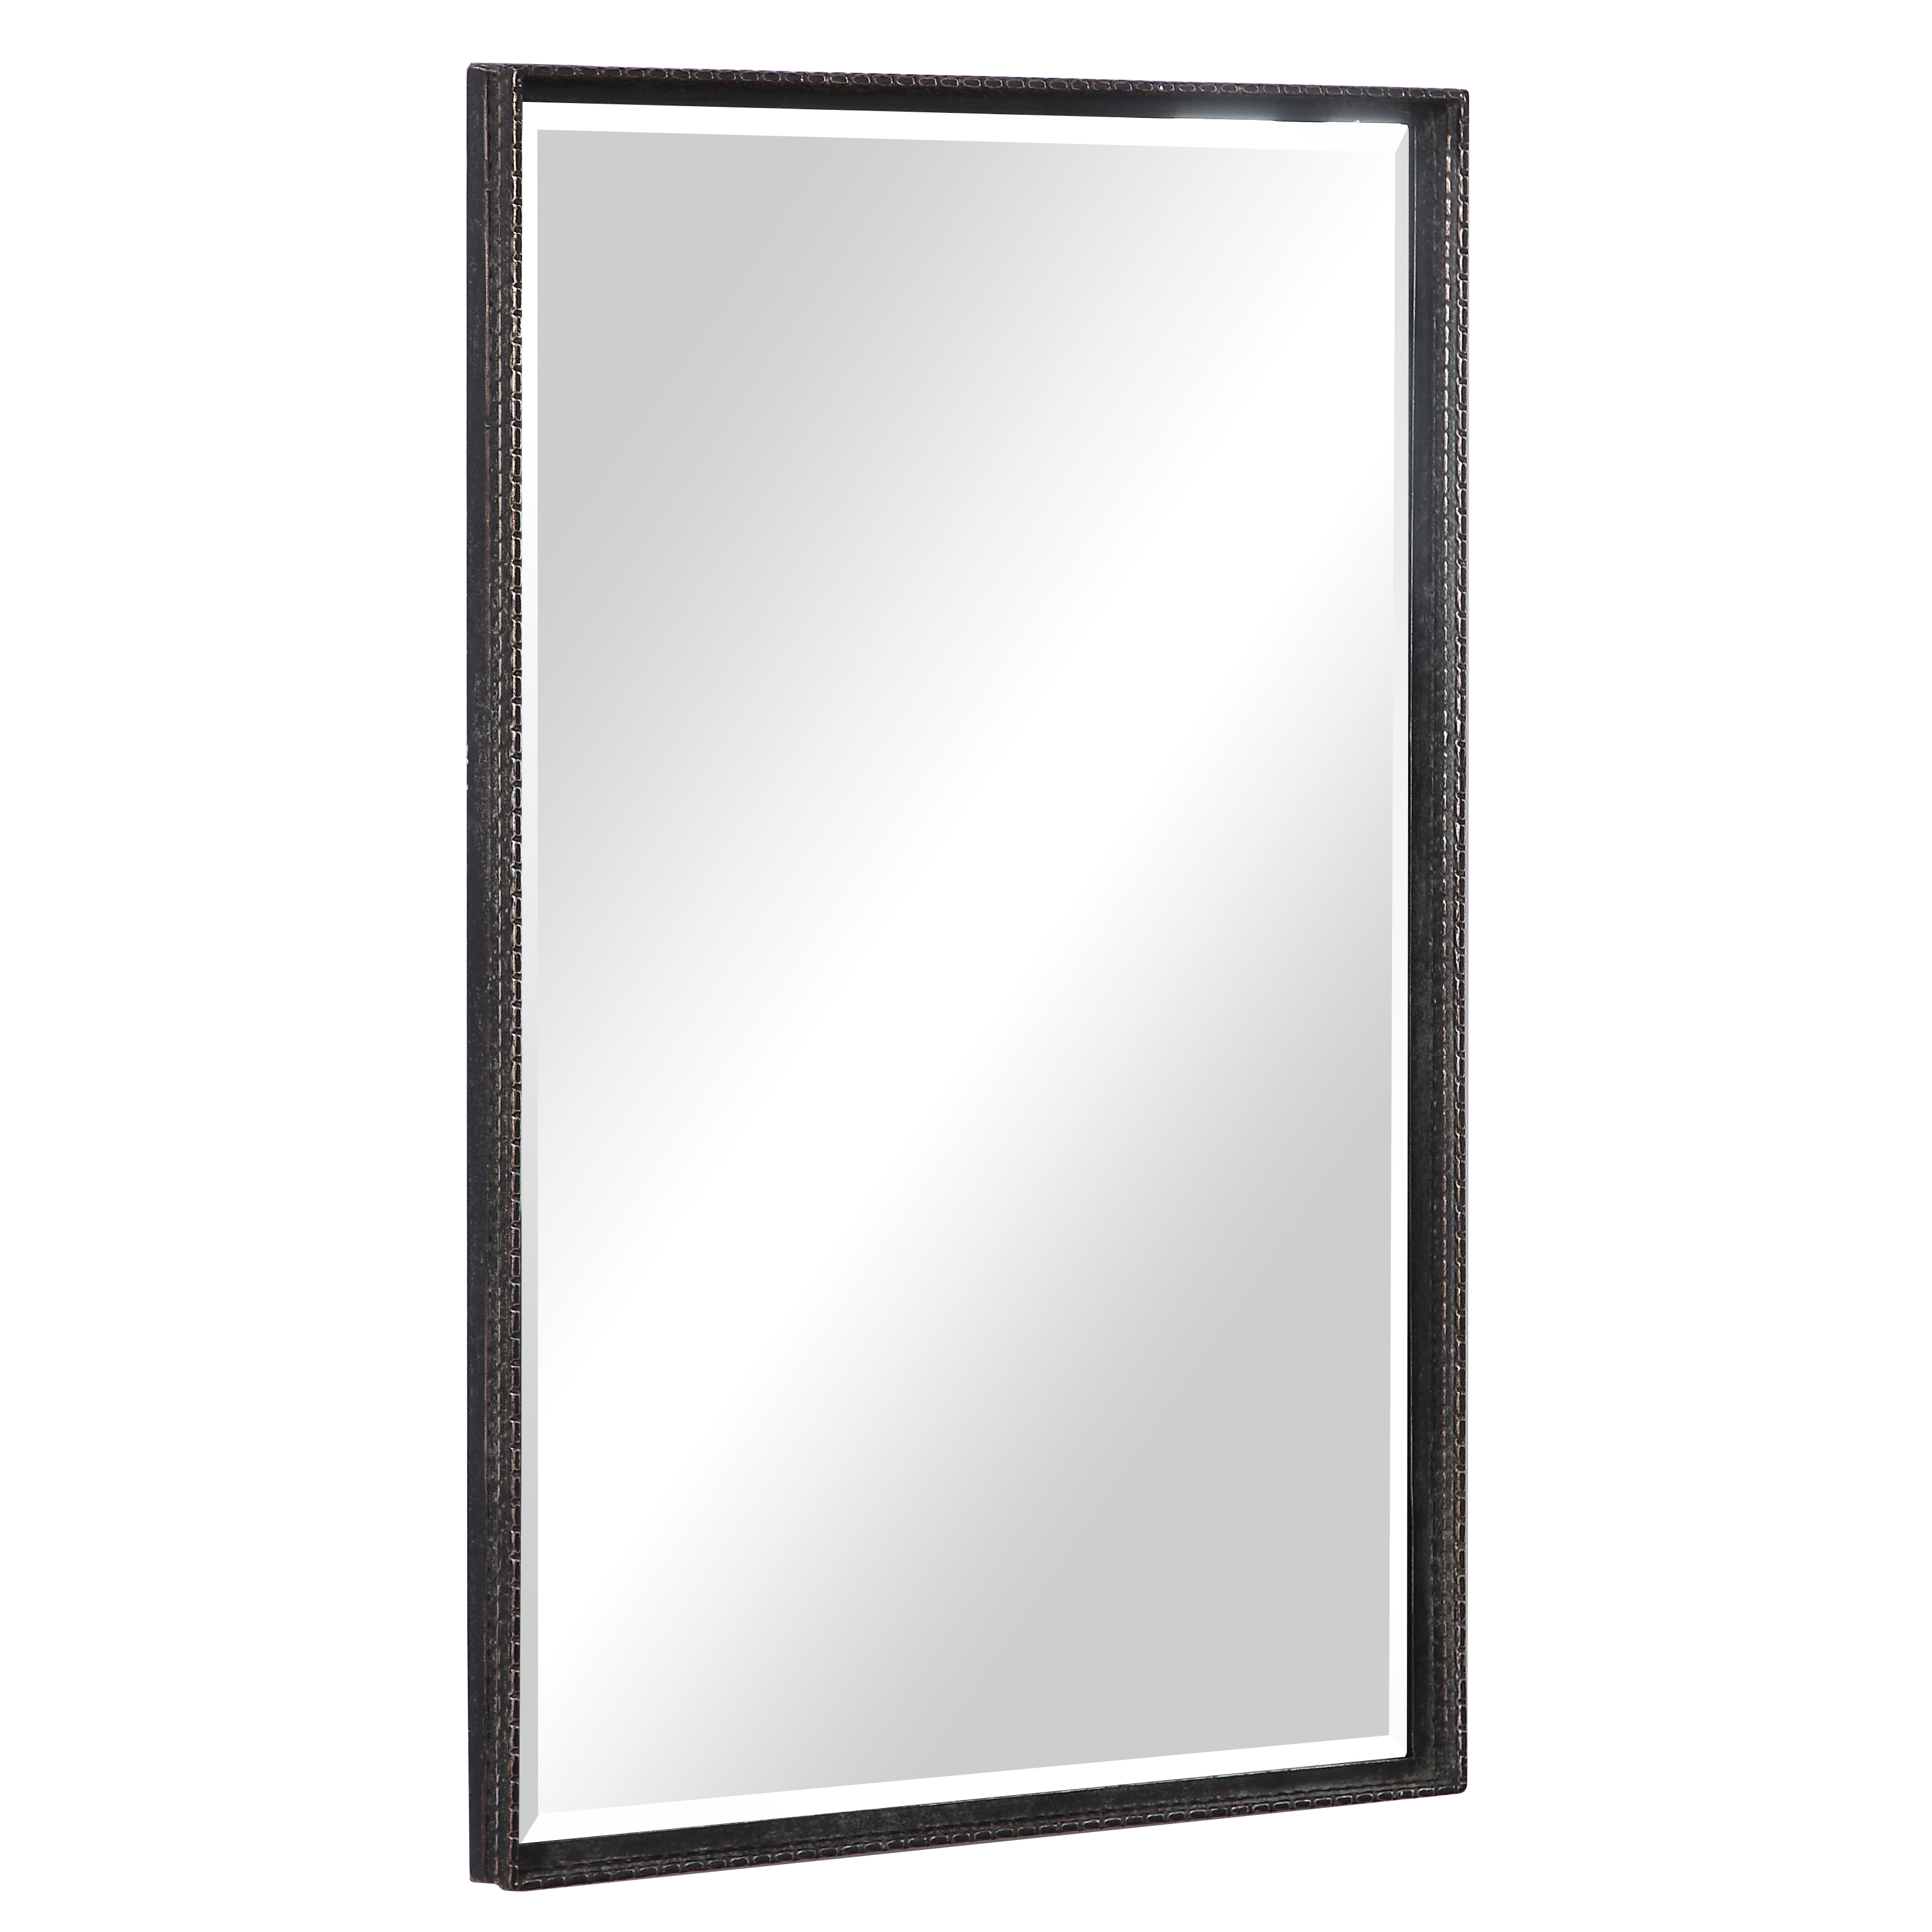 Callan Iron Vanity Mirror - Image 2